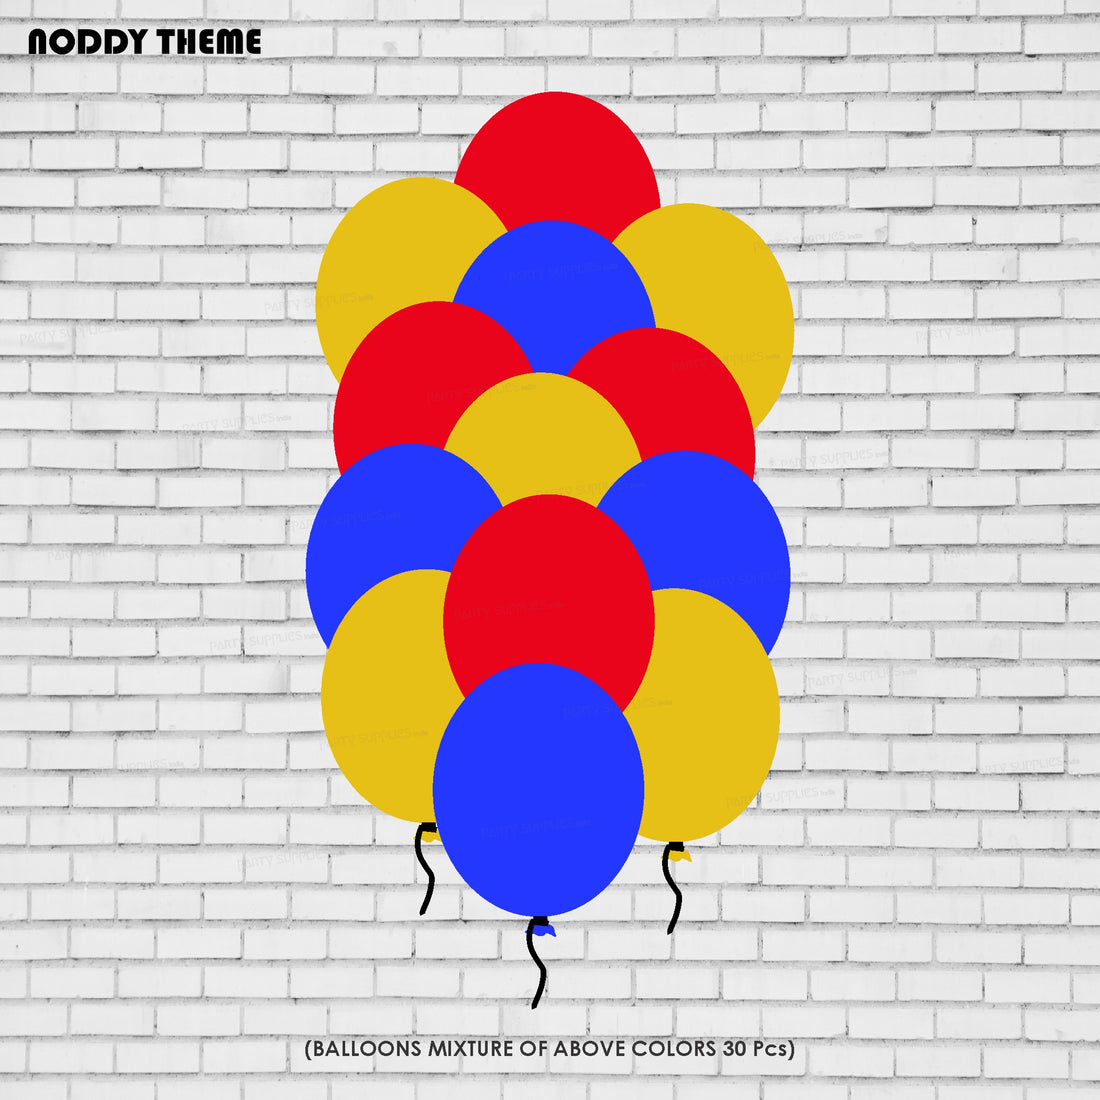 PSI Noddy Theme Colour 60Pcs Balloons